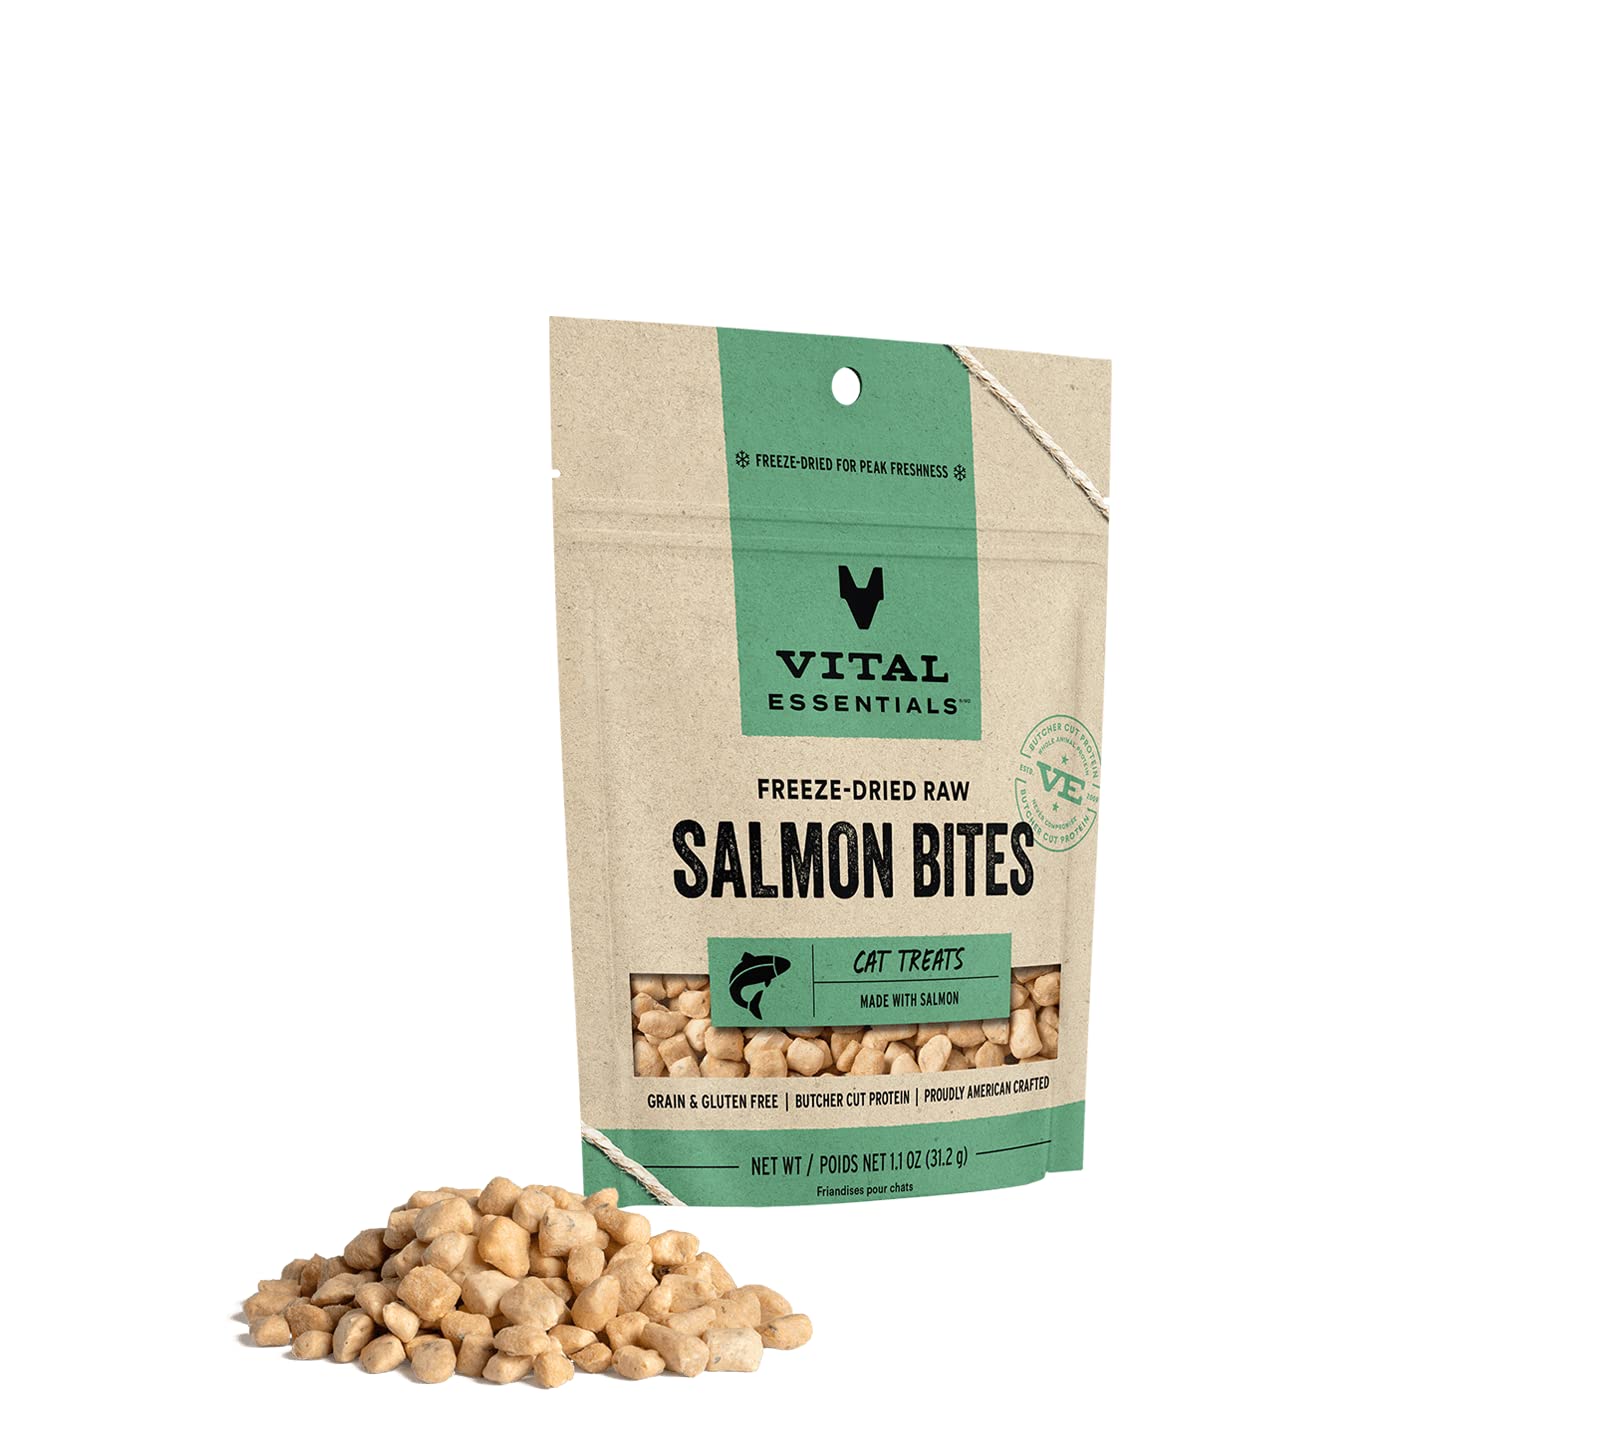 Health Extension Super Bites Salmon Freeze-Dried Raw Cat Treats - .75 Oz  